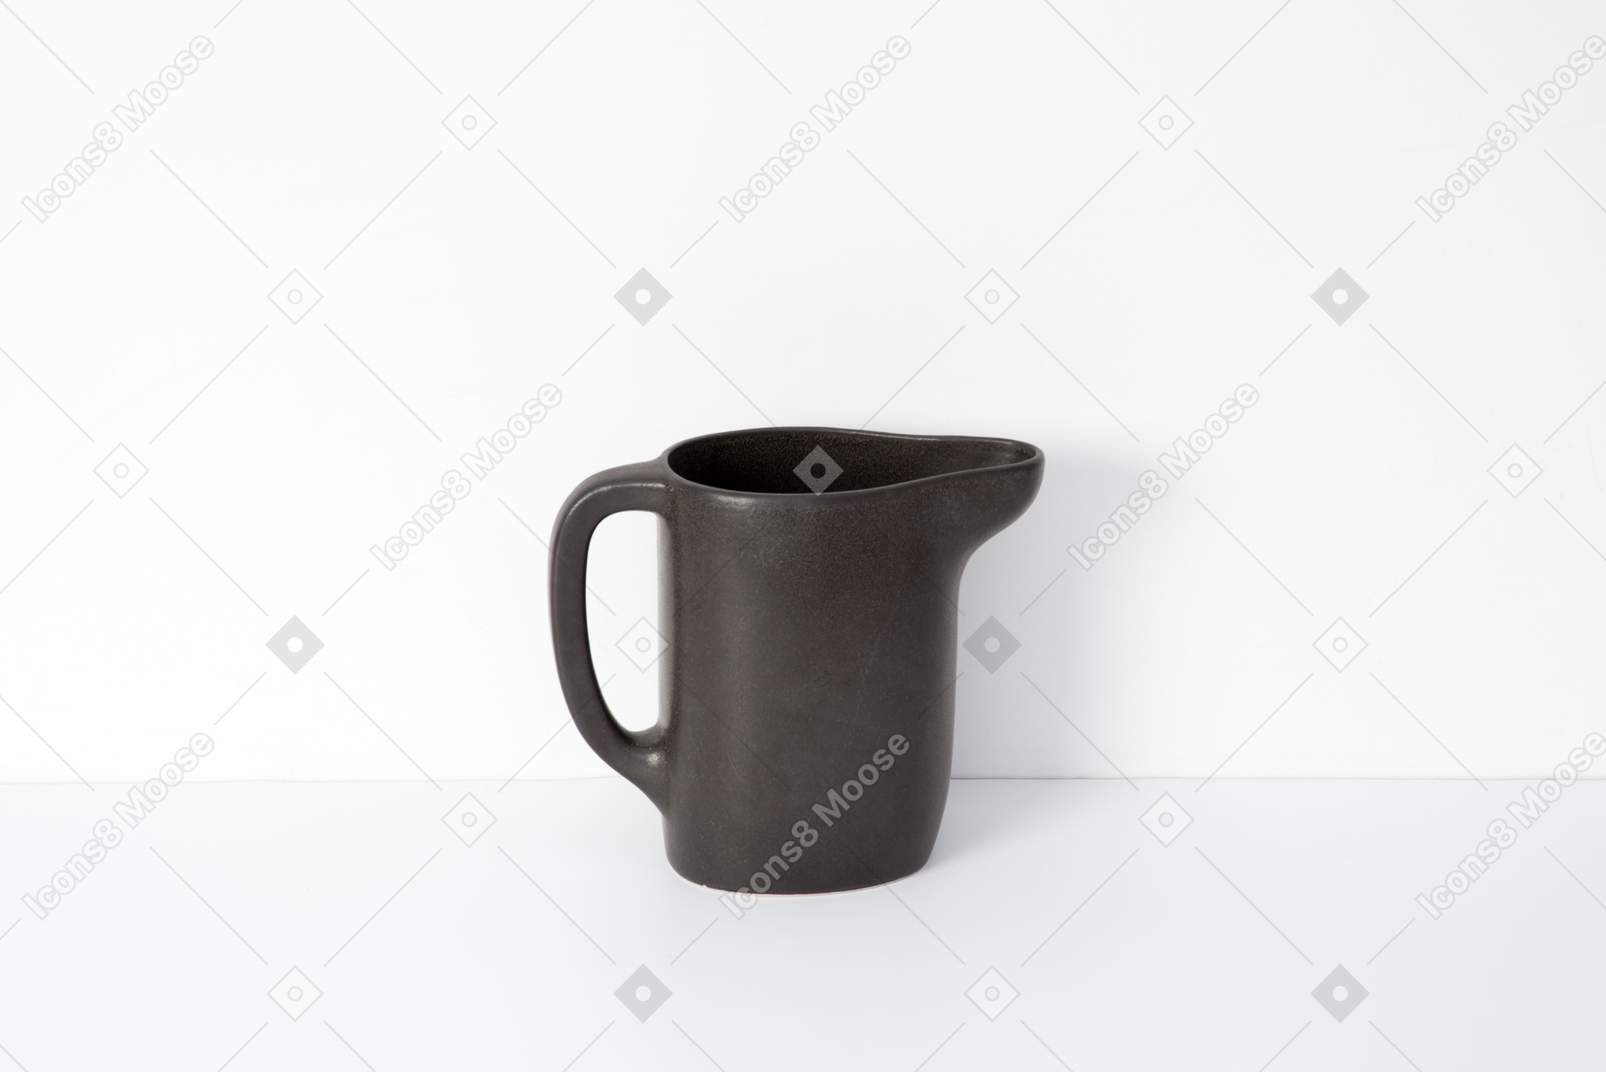 Brown ceramic mug with spout